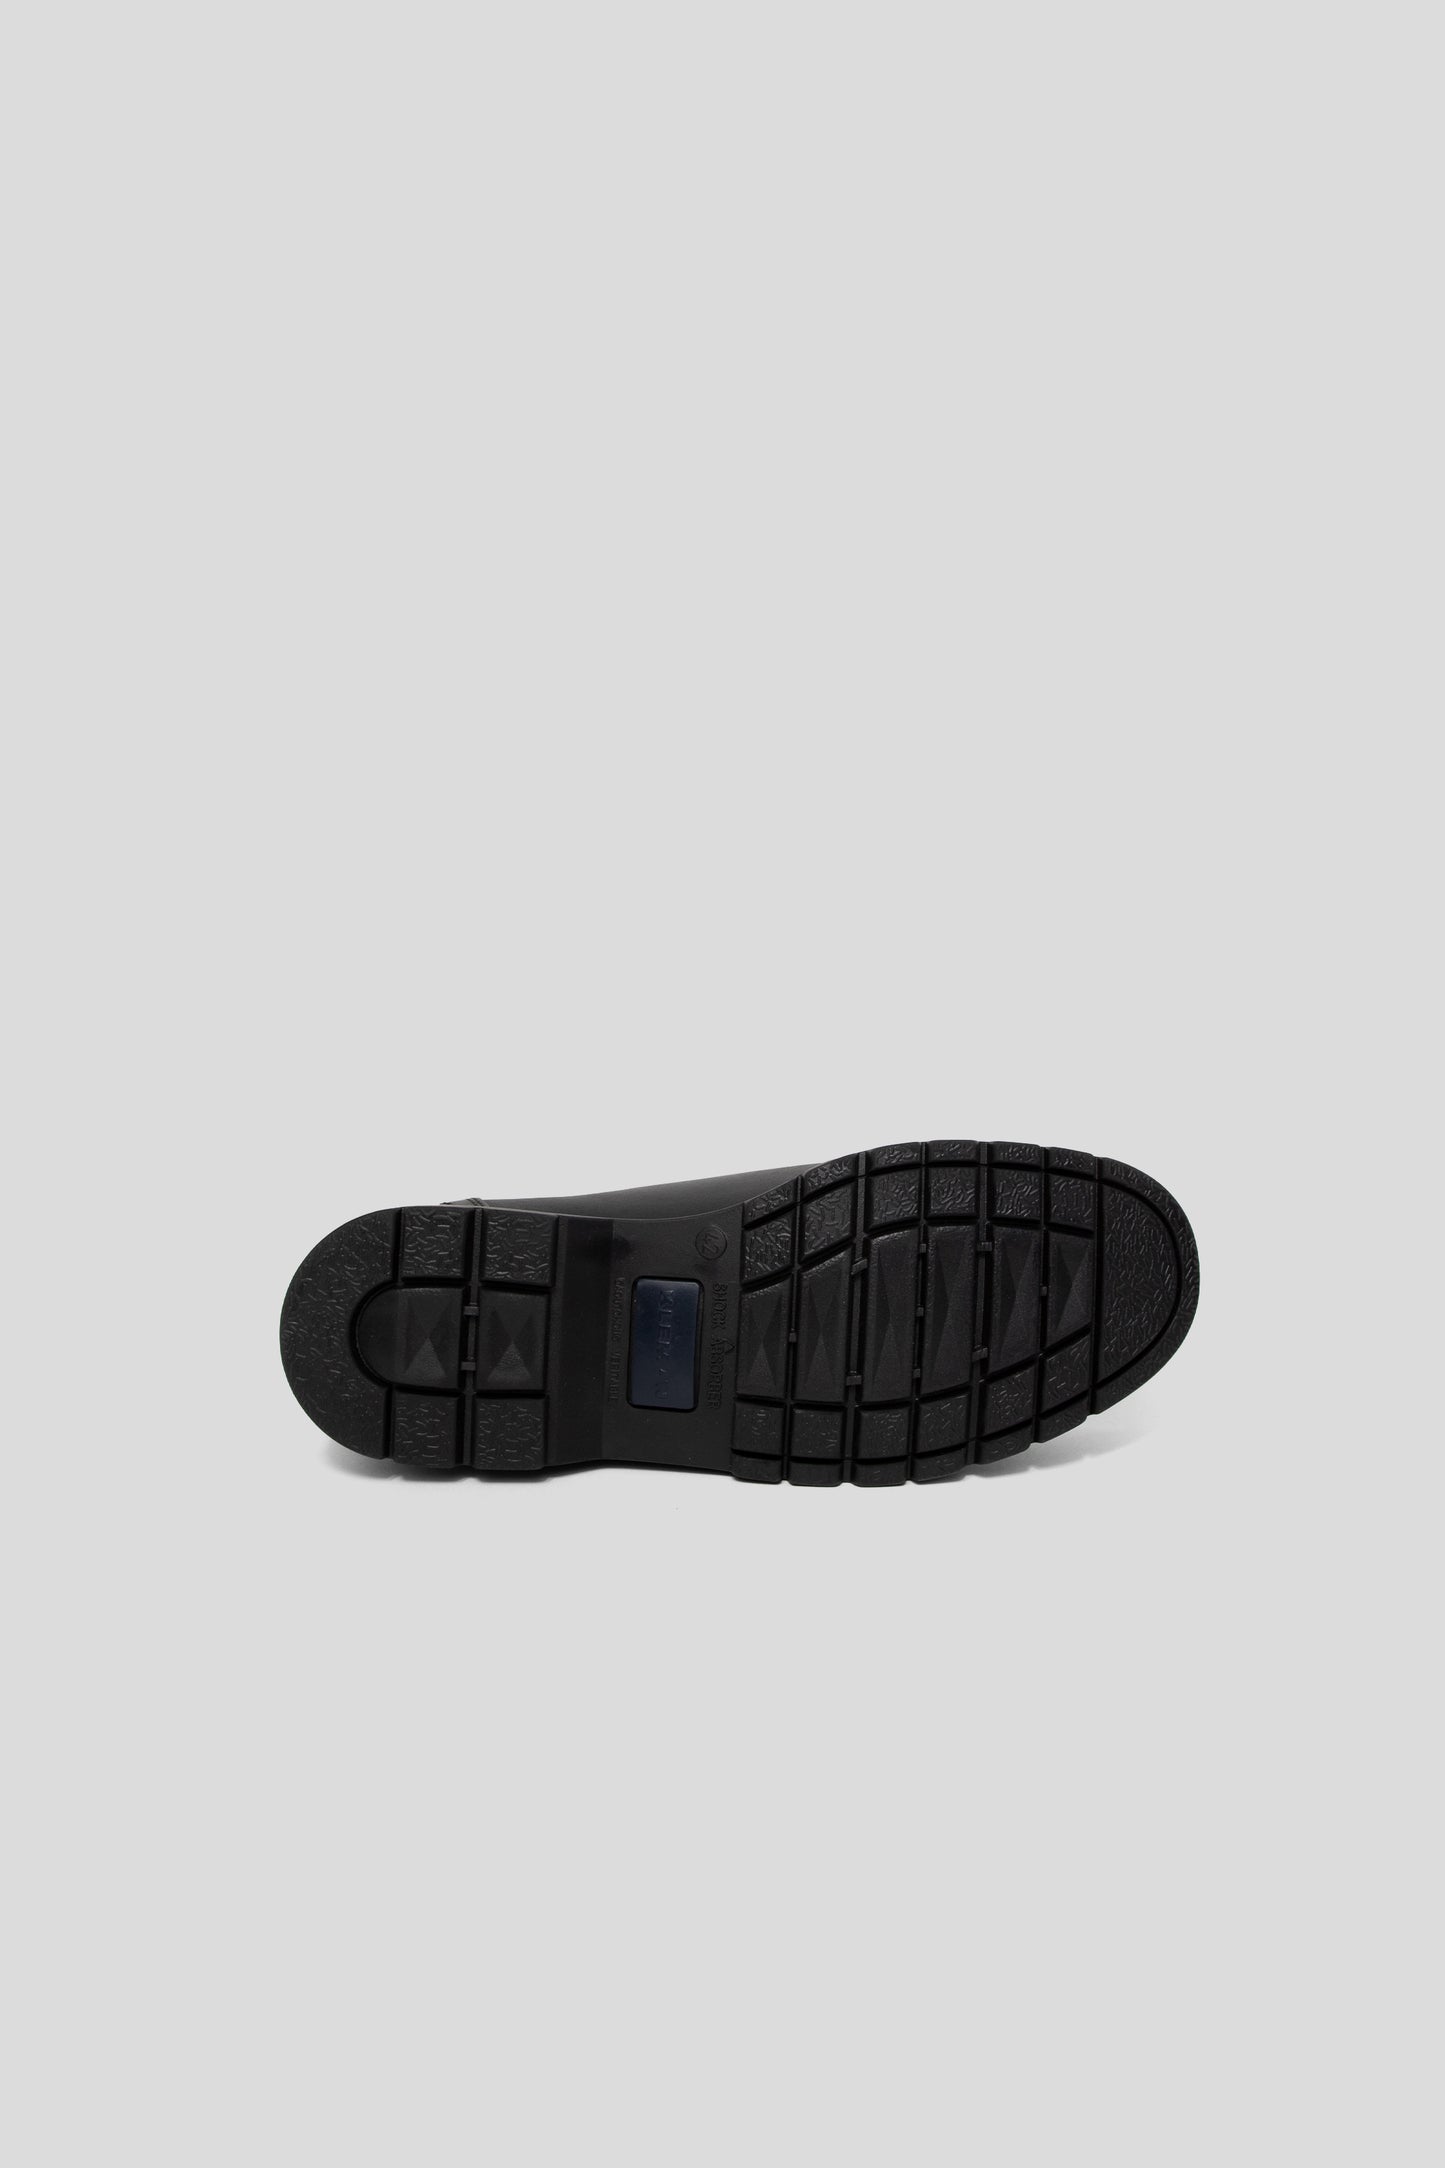 Kleman Women's Padror Shoe in Black